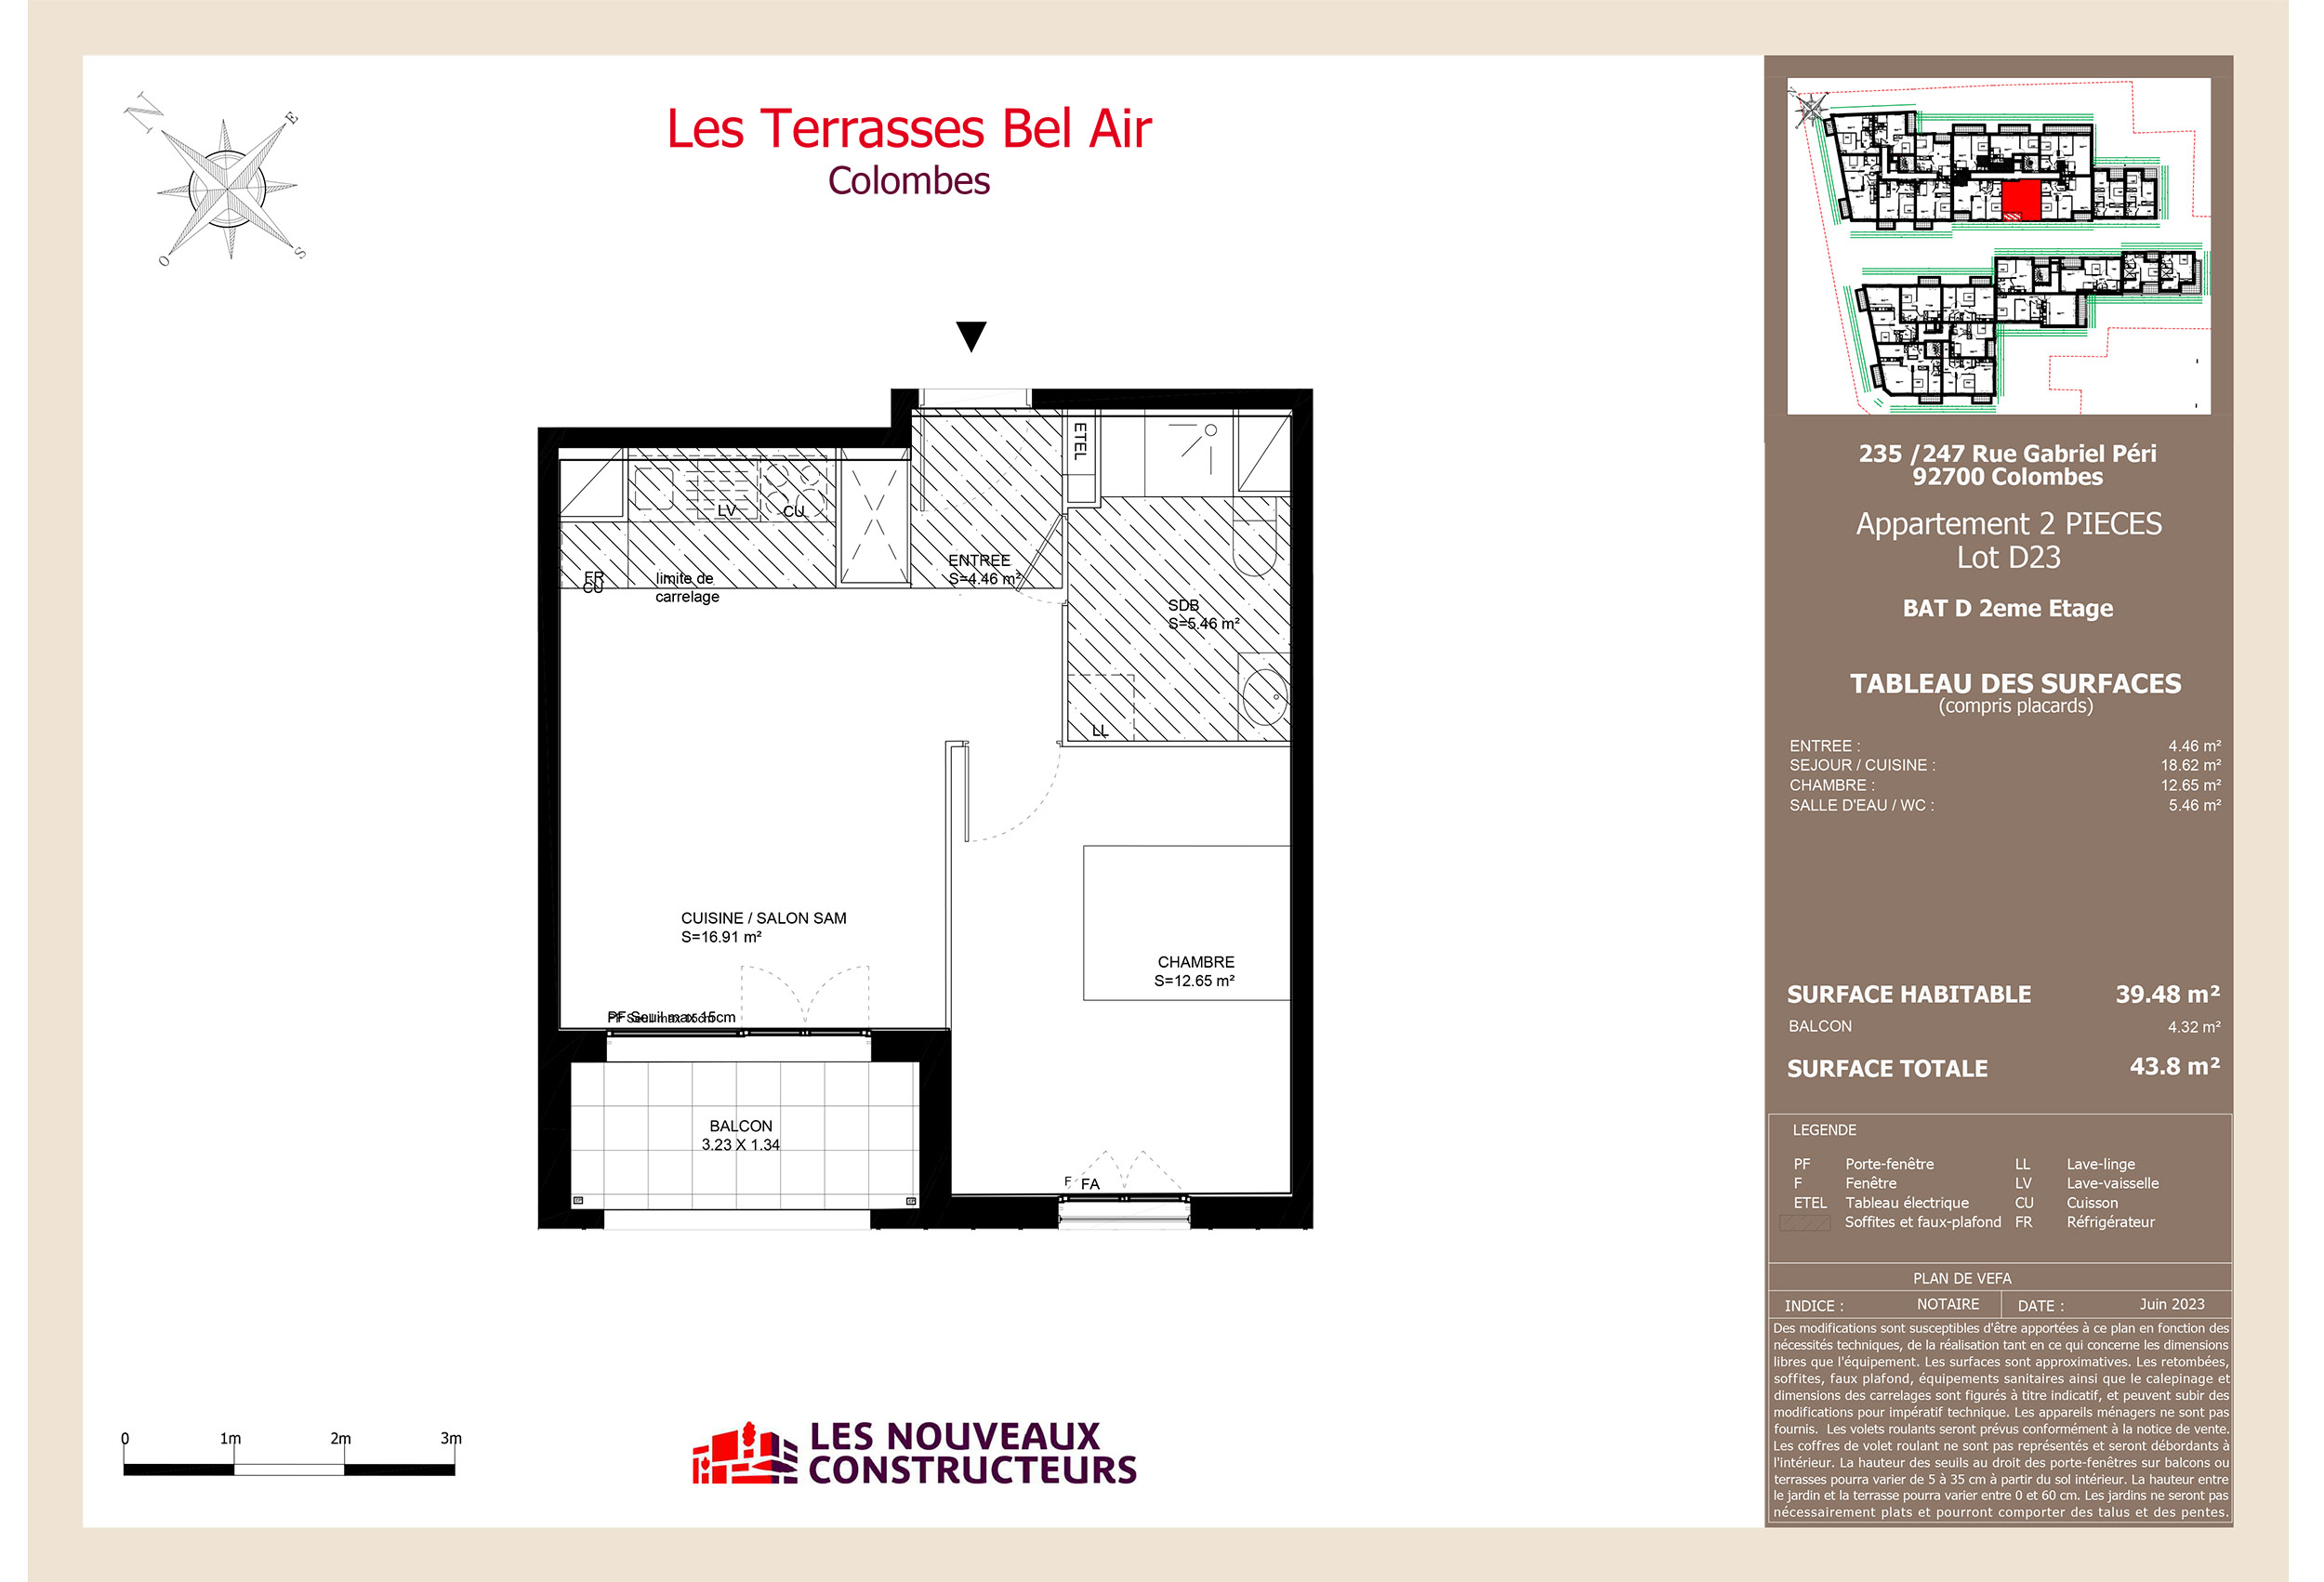 Colombes - Les Terrasses Bel Air - Lot d23 - 2 Pièces